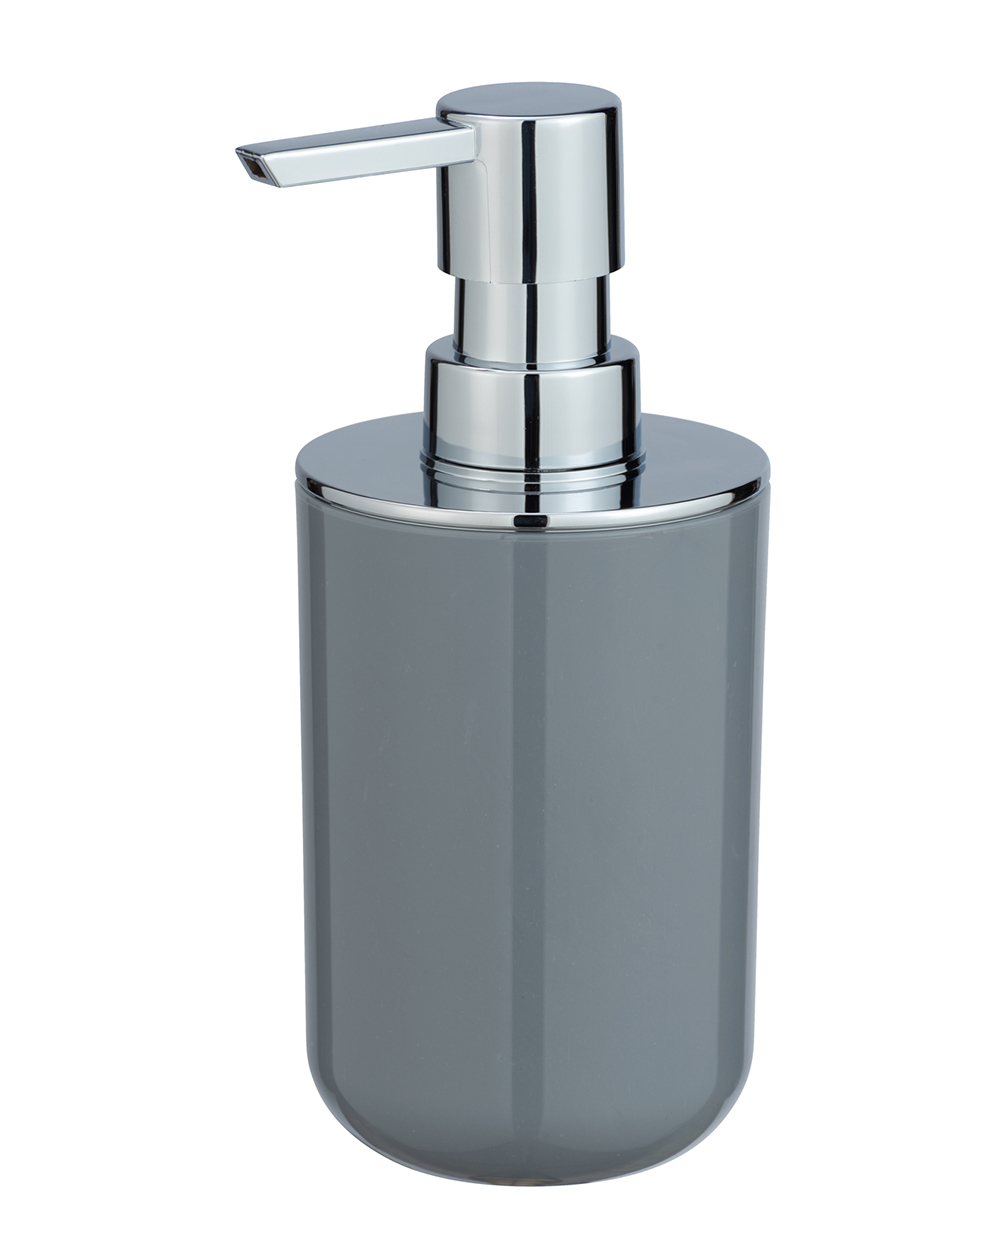 Wenko Soap Dispenser Mod. Posa Grey/Chrome